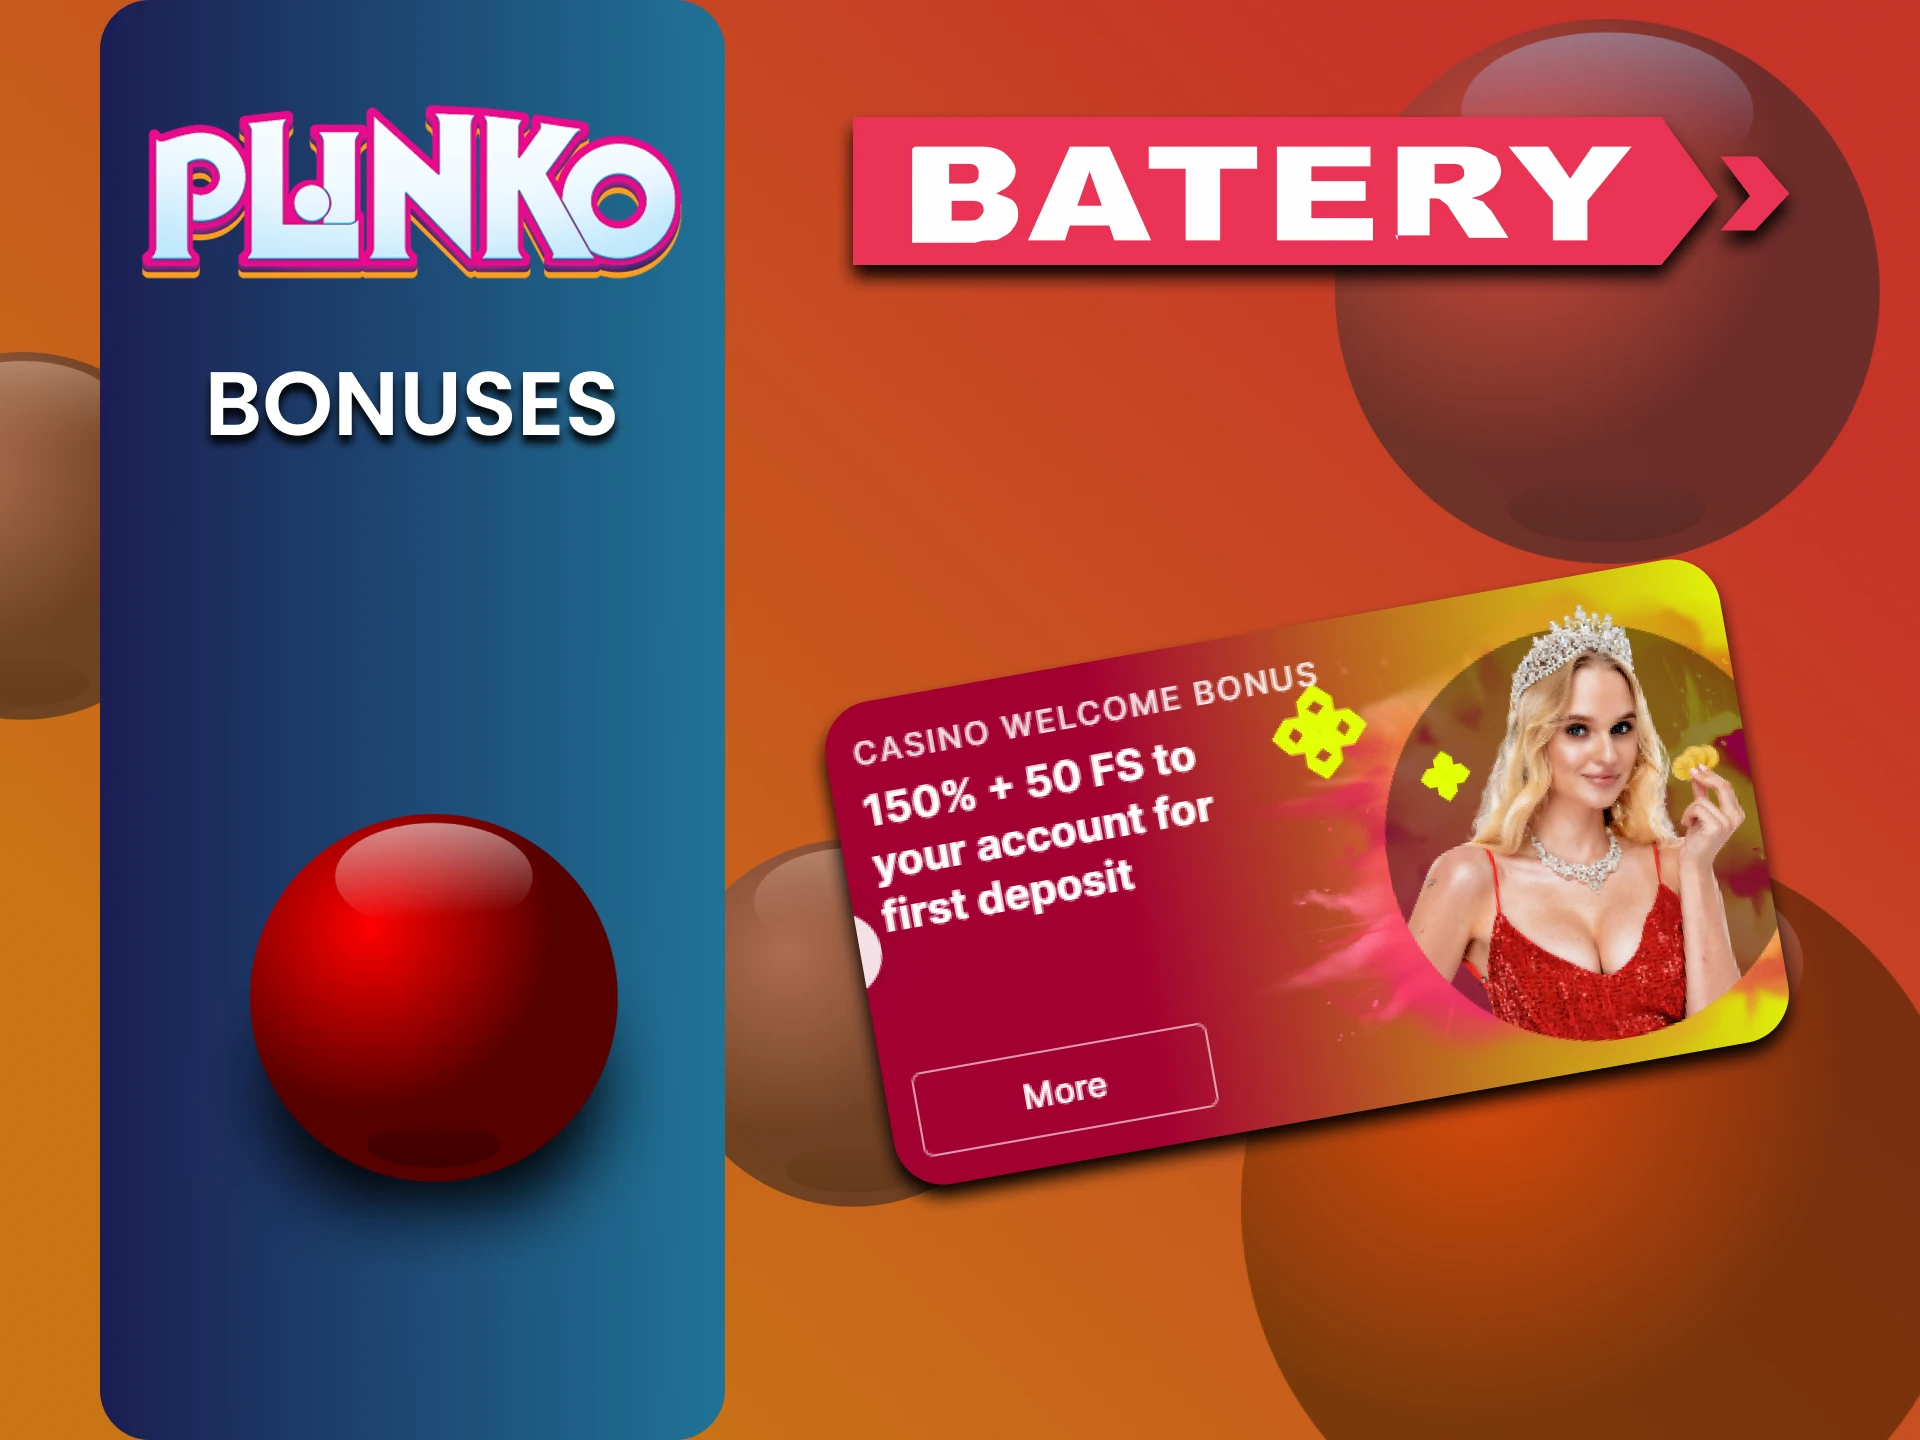 Use bonuses to play Plinko from Batery.